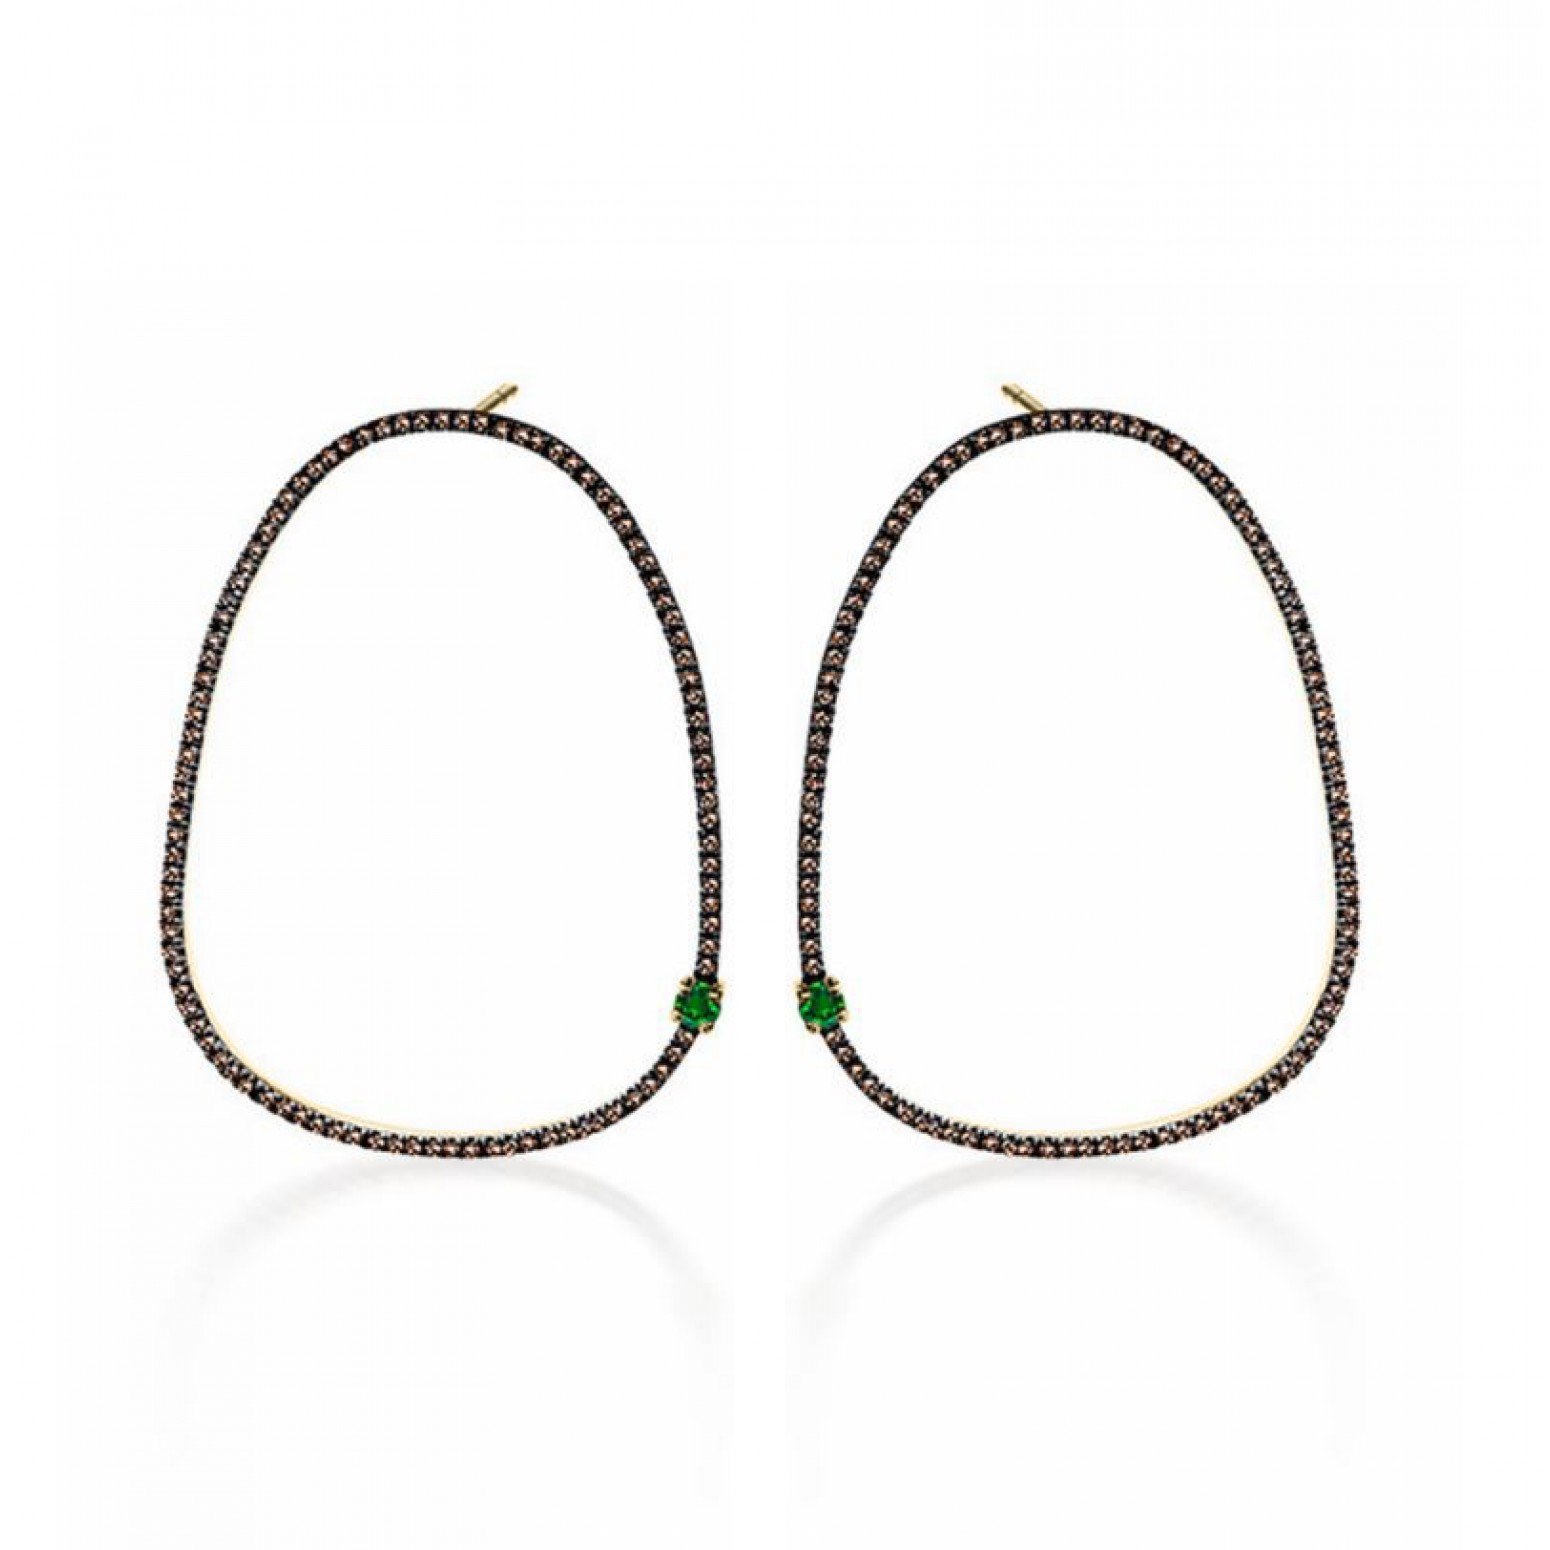 Dangle earrings 14K gold with brown diamonds 0.39ct and emeralds, sk3377 EARRINGS Κοσμηματα - chrilia.gr